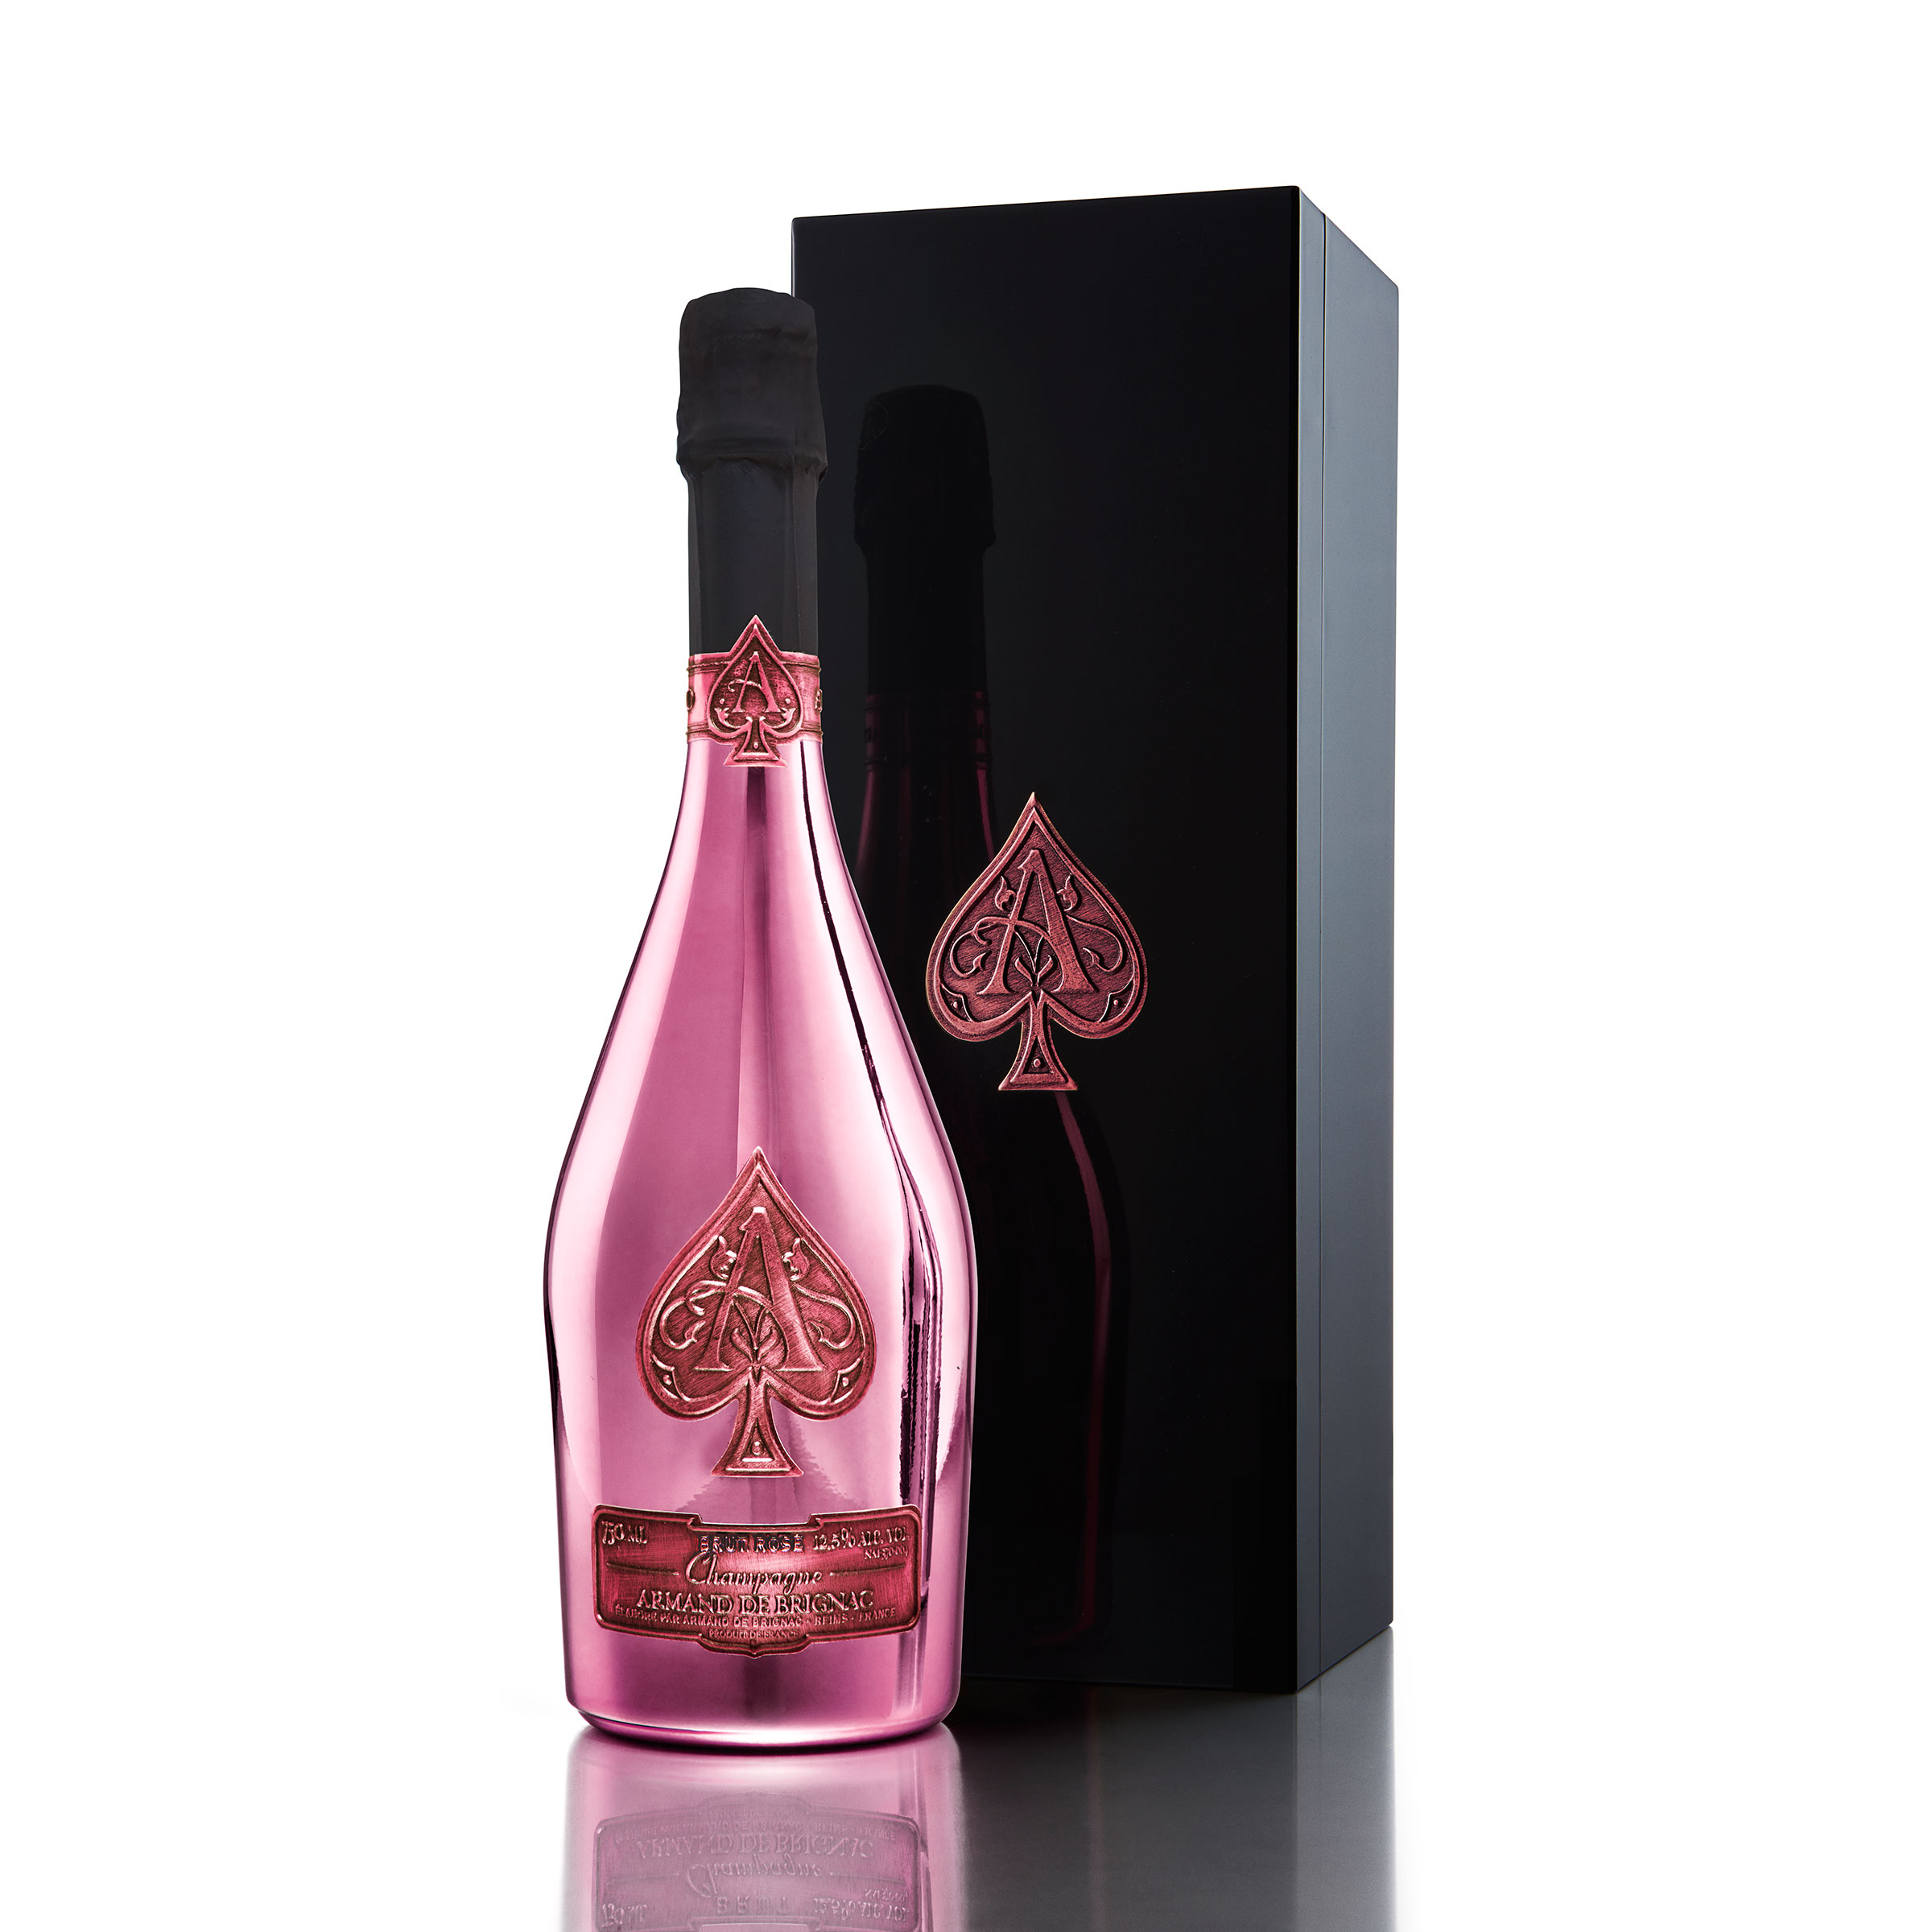 Buy & Send Armand de Brignac Brut Rose, NV Champagne 75cl in Branded Box Gift Online